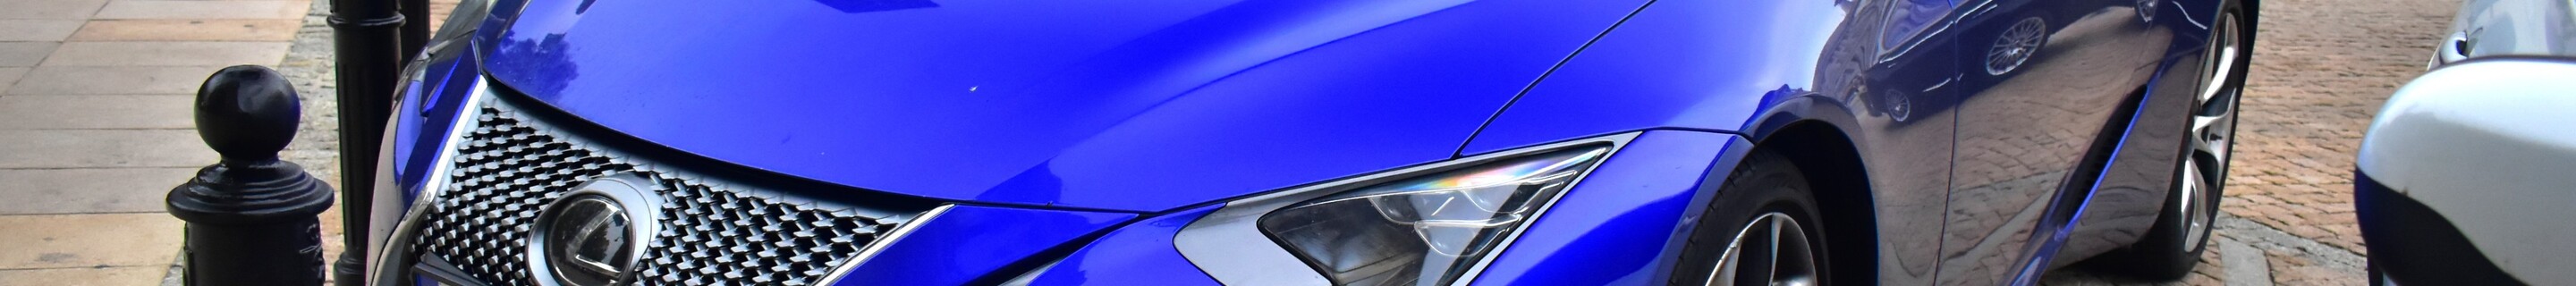 Lexus LC 500 Structural Blue Edition